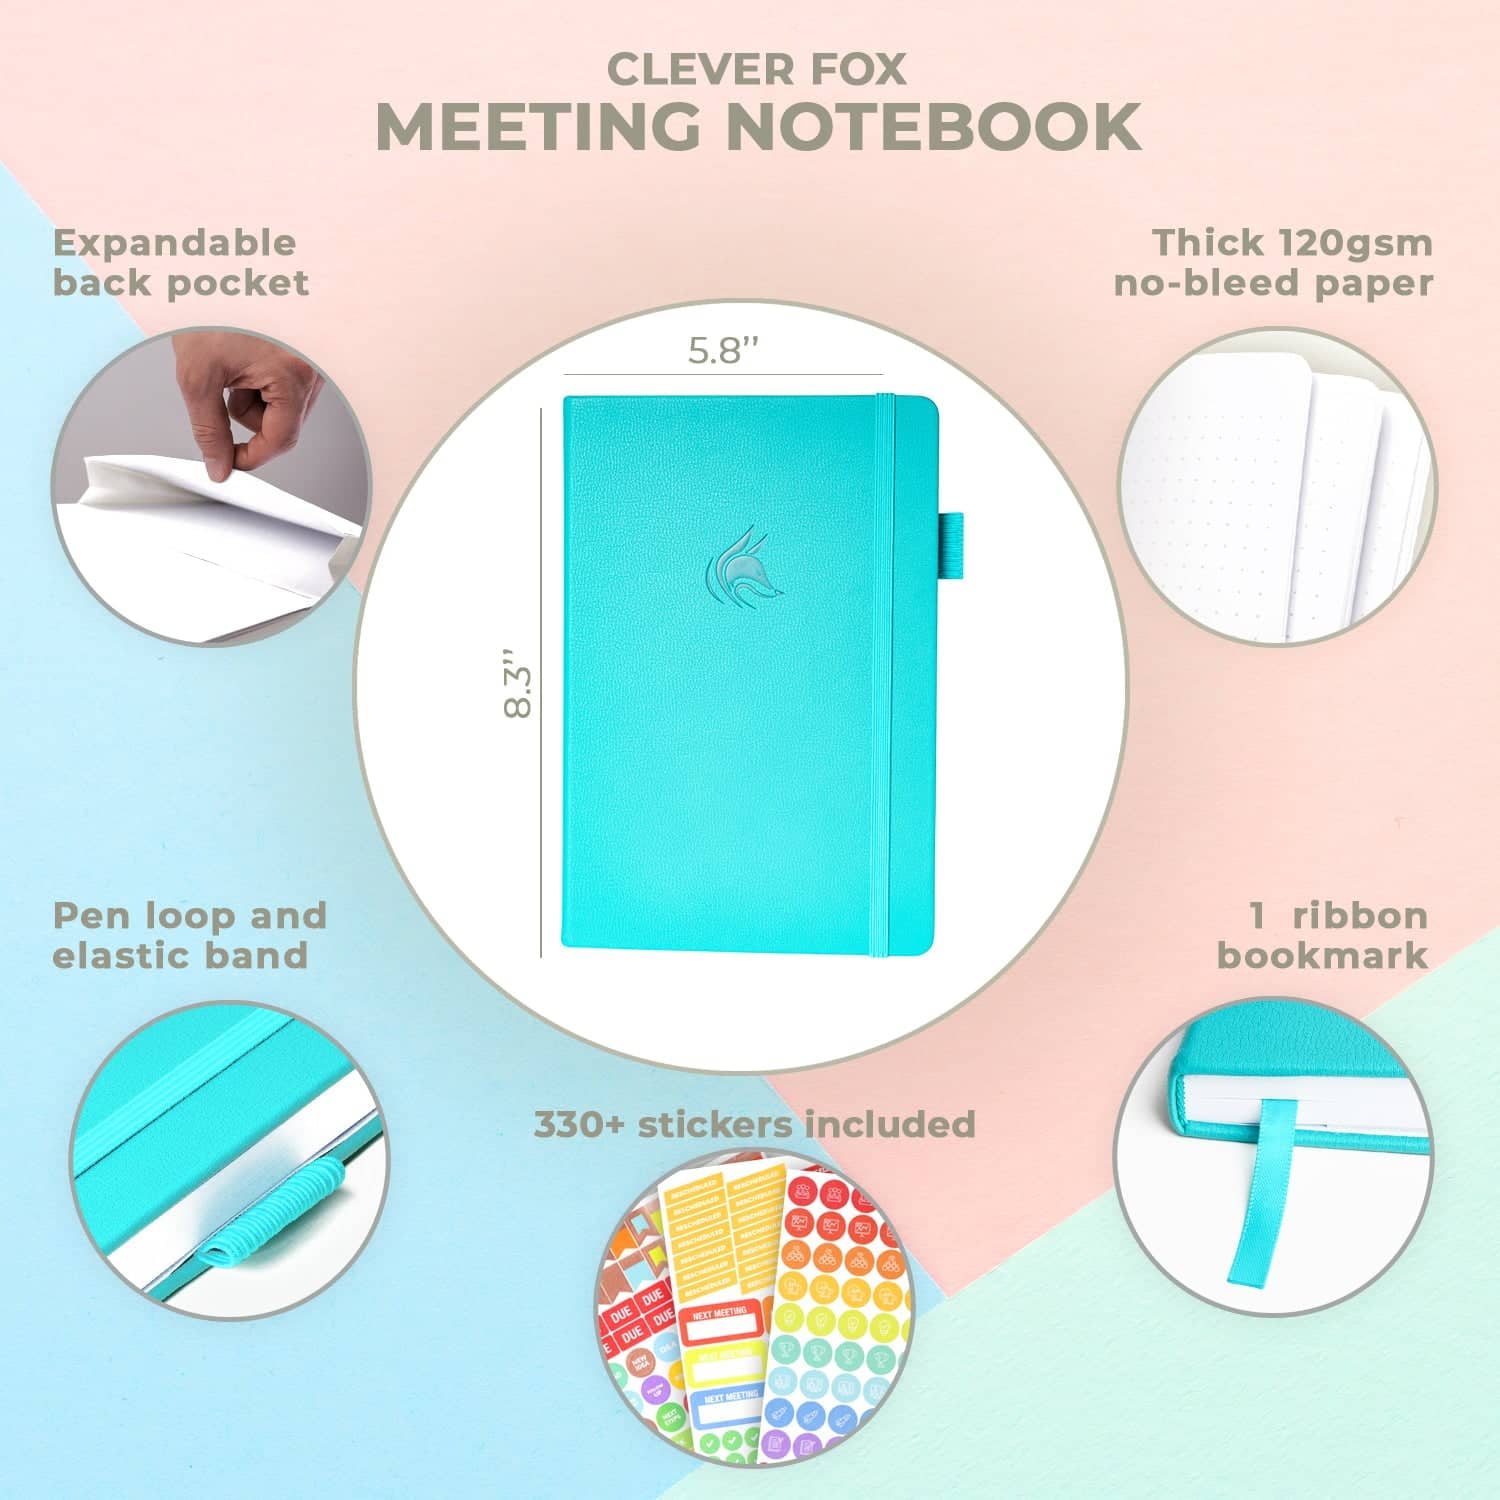 Clever Fox Meeting Notebook